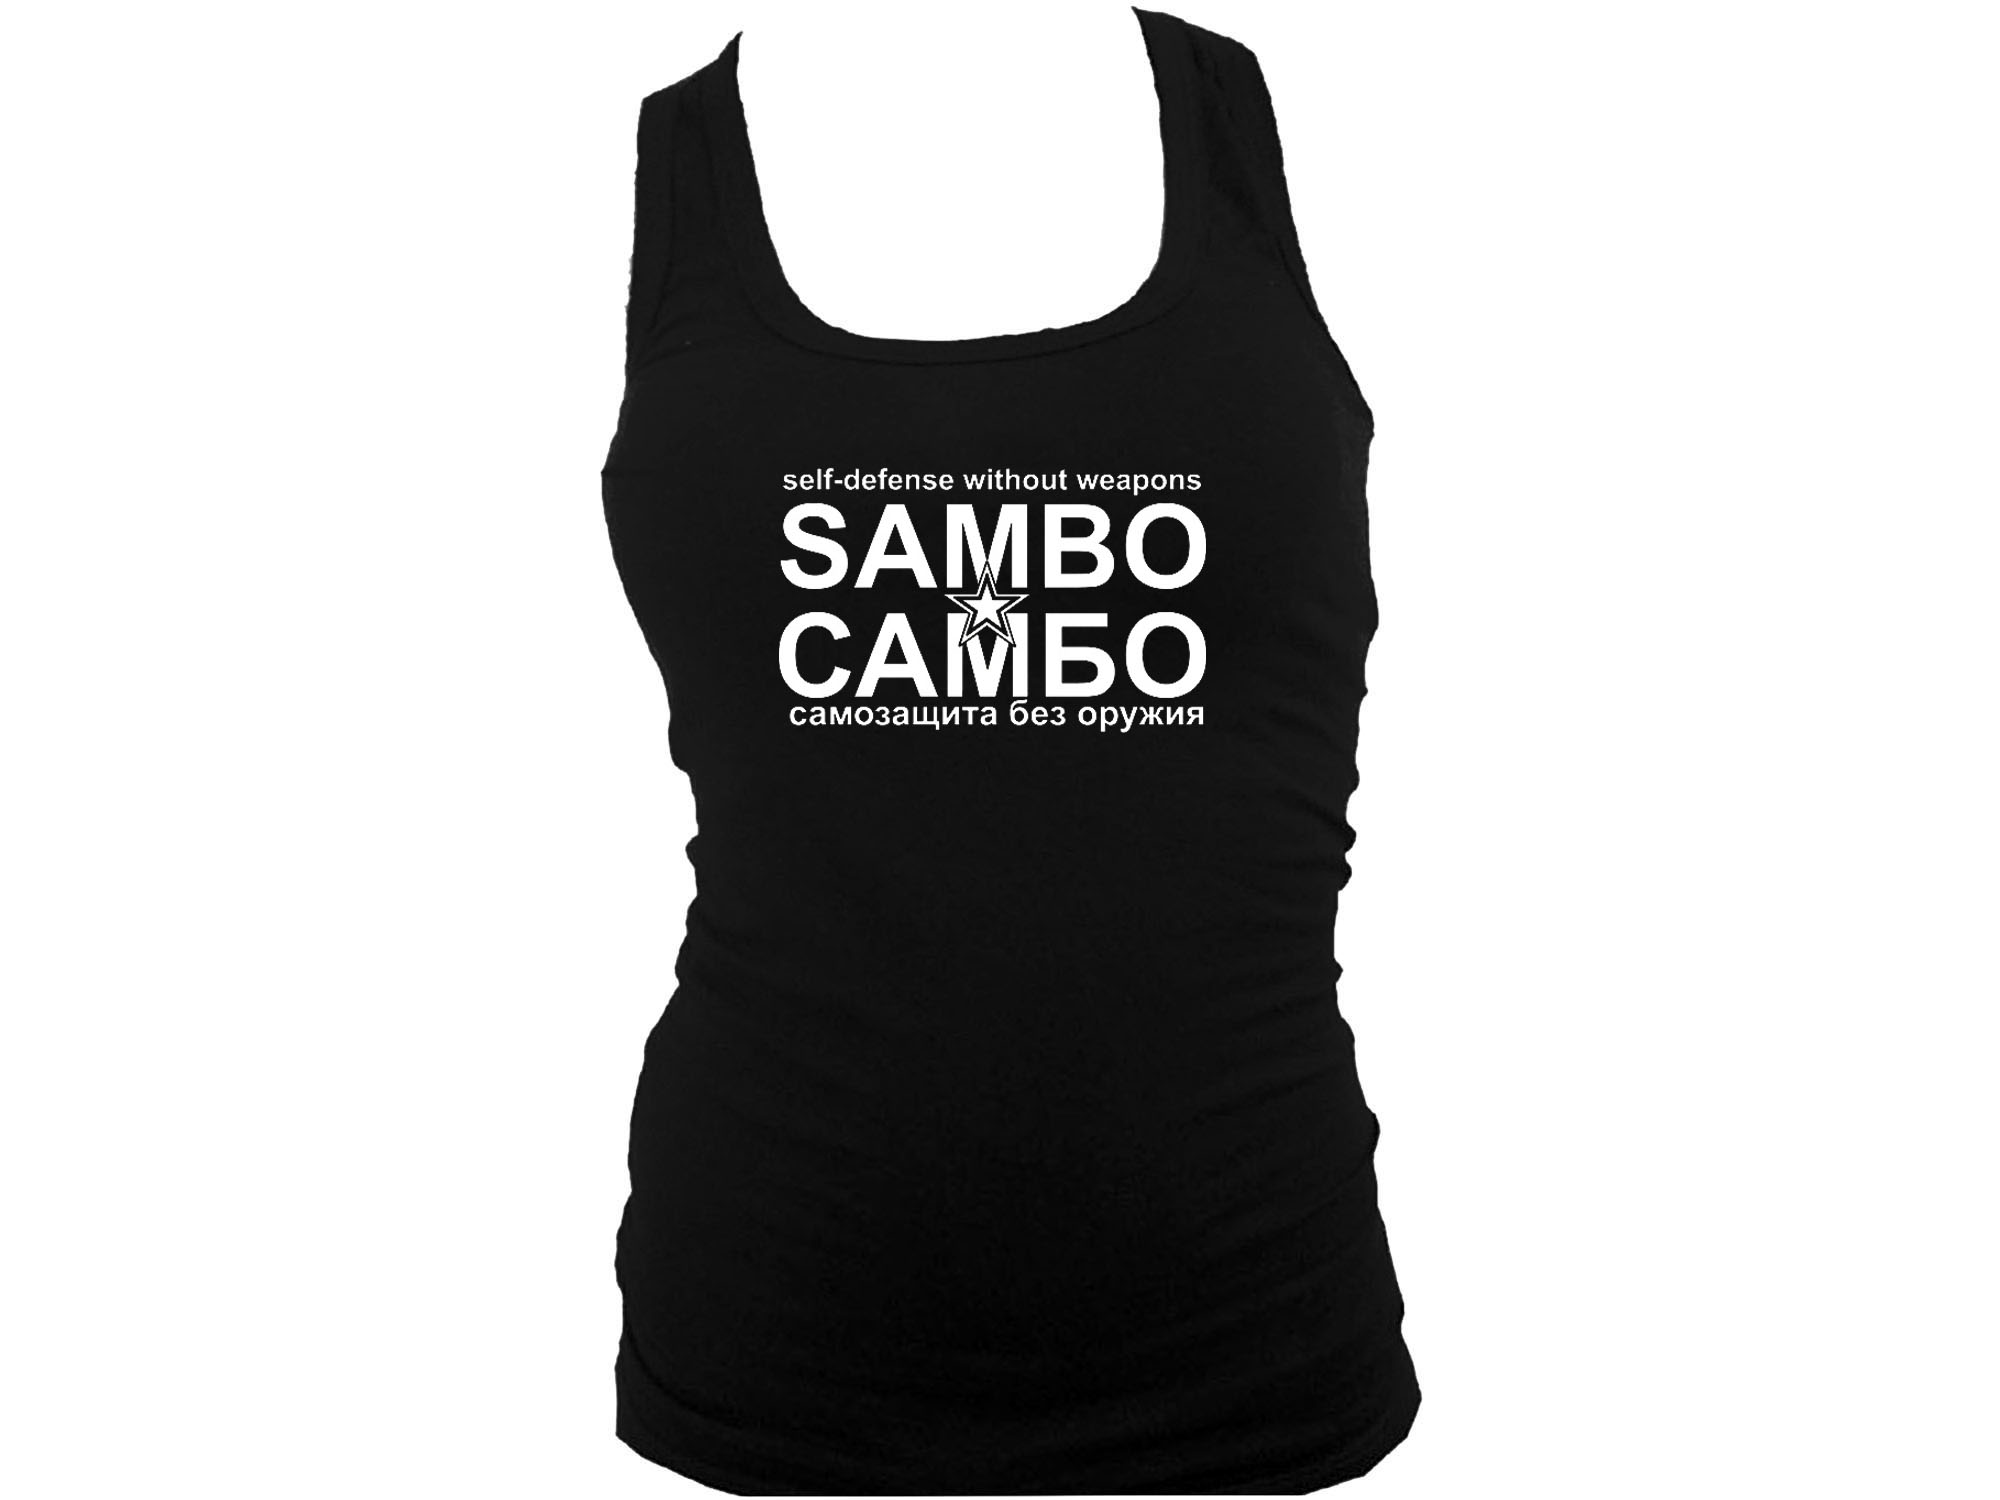 Sambo cambo women tank top L/XL